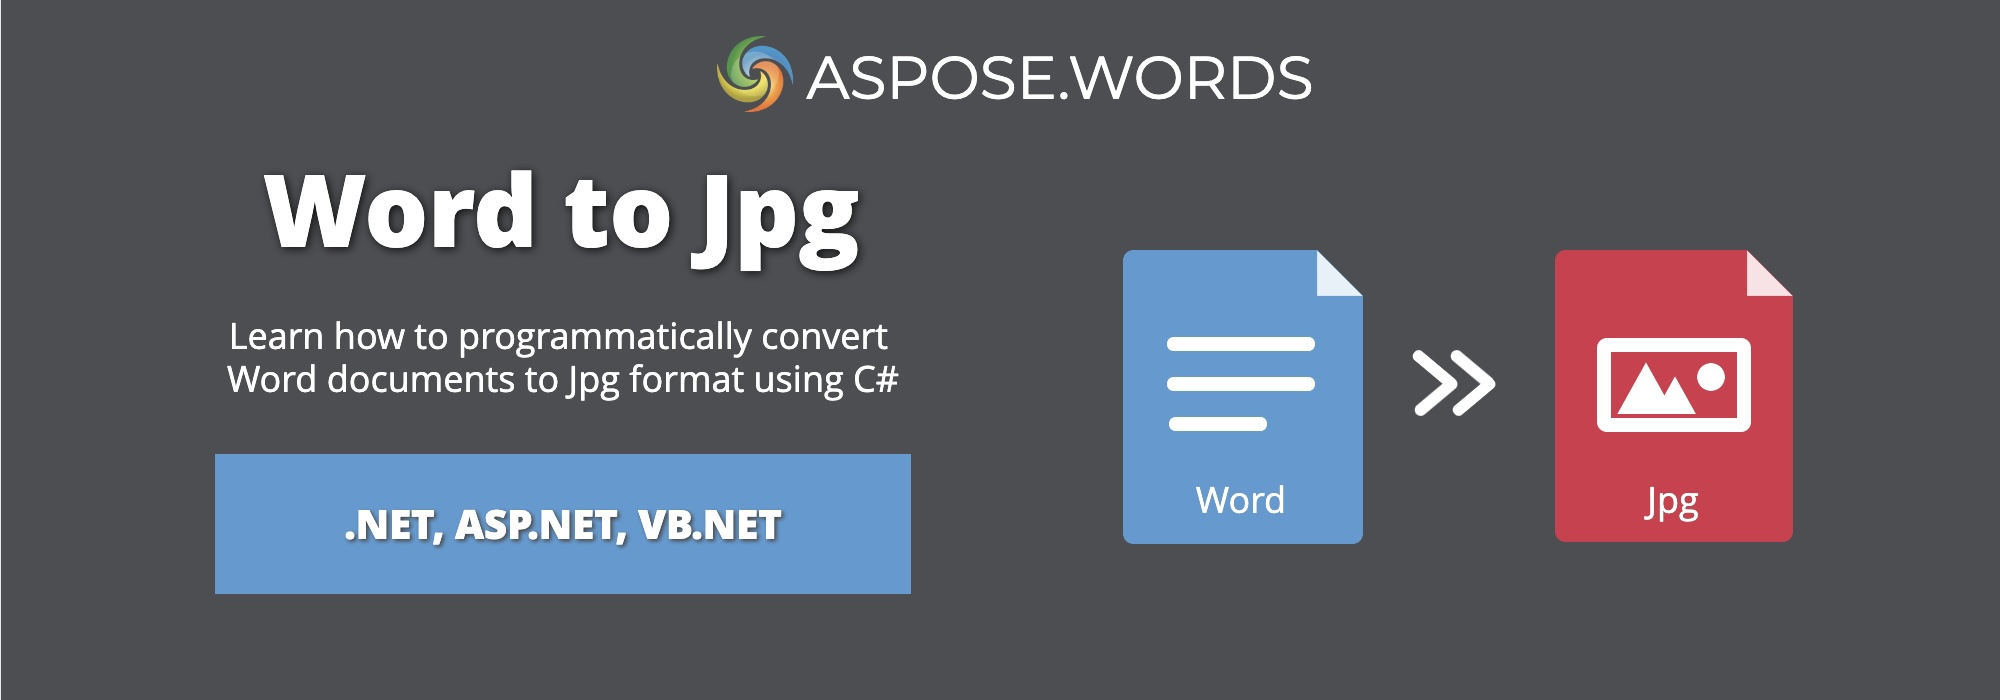 Convert Word to JPG C# | Convert DOCX to JPG C#